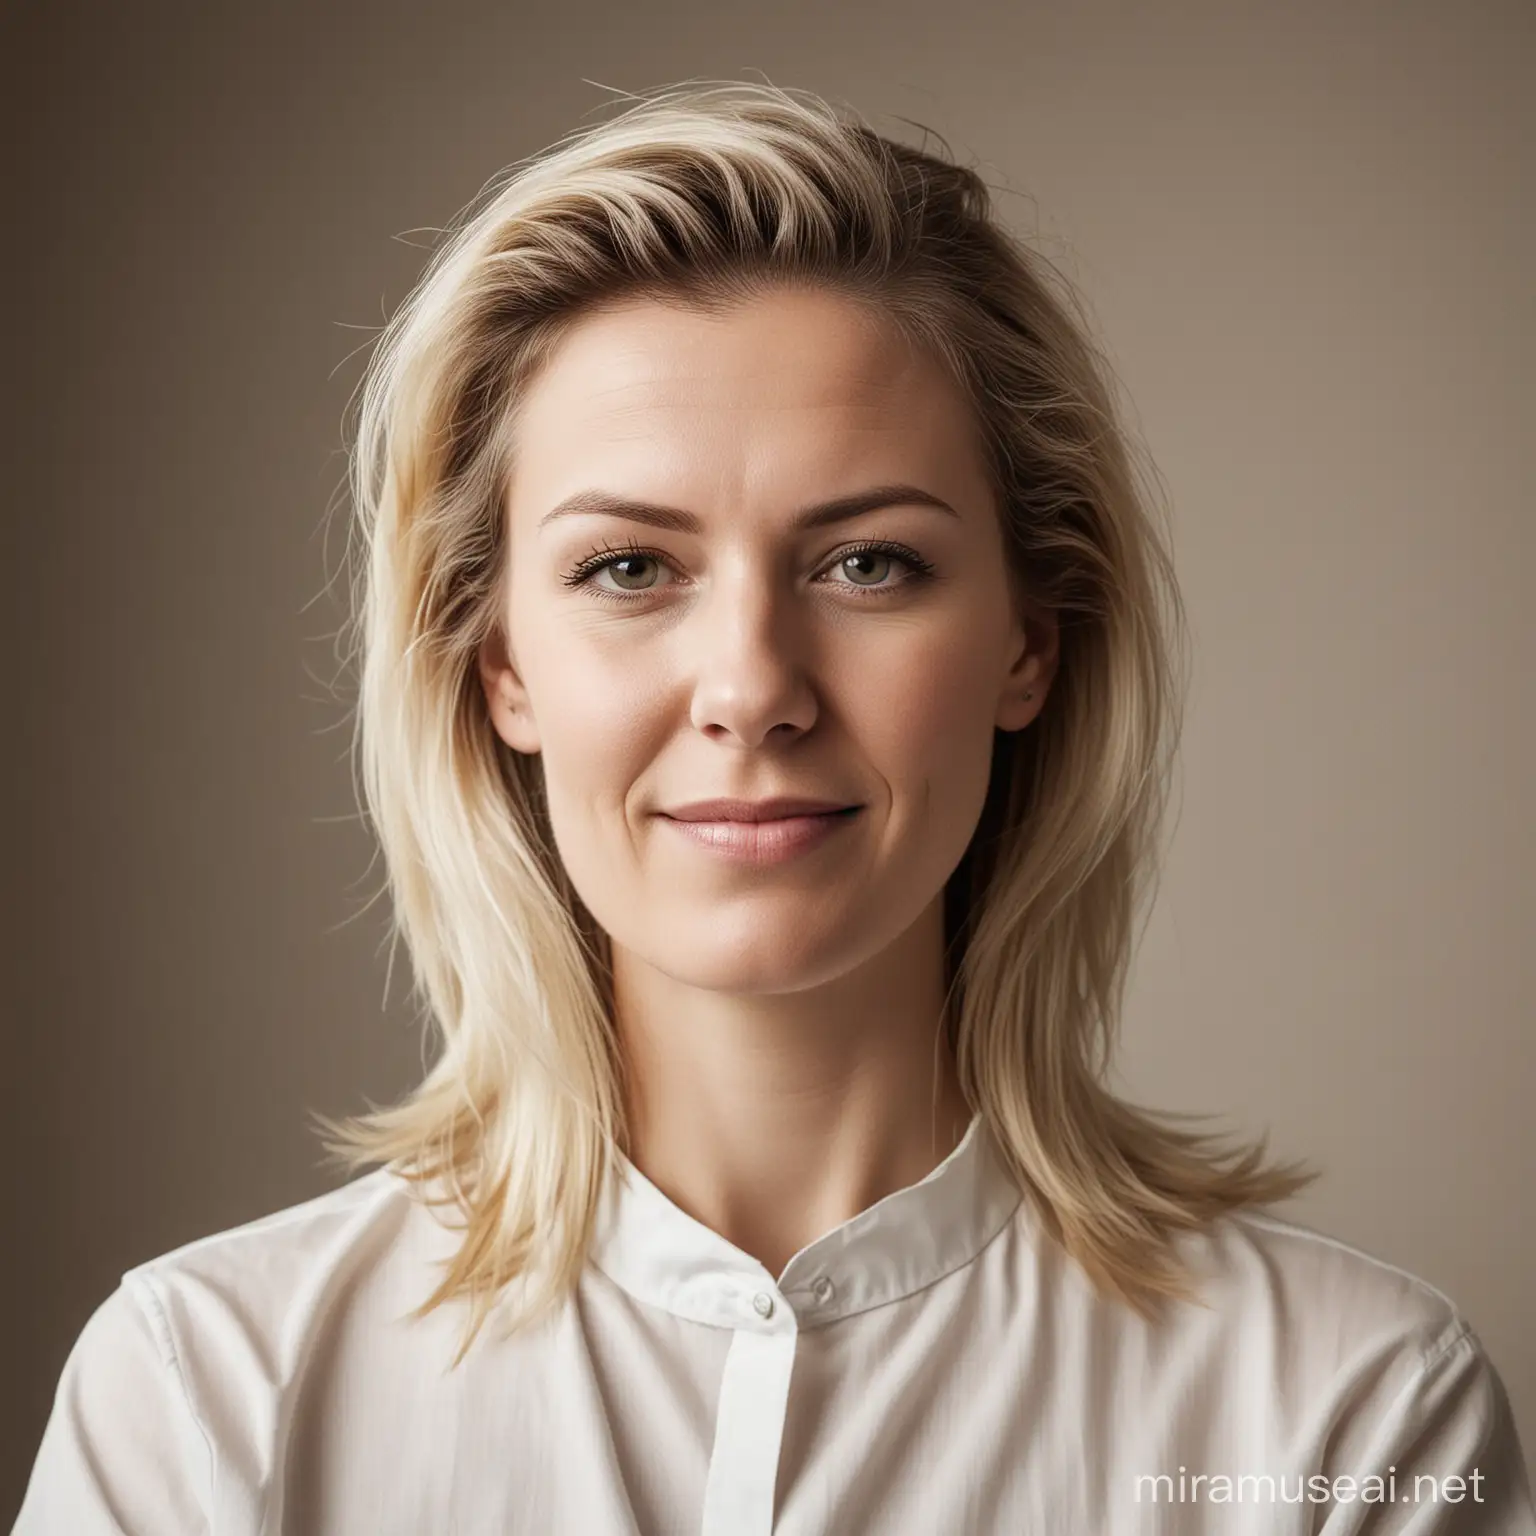 Professional Swedish Female Hairdresser Portrait in Her 30s